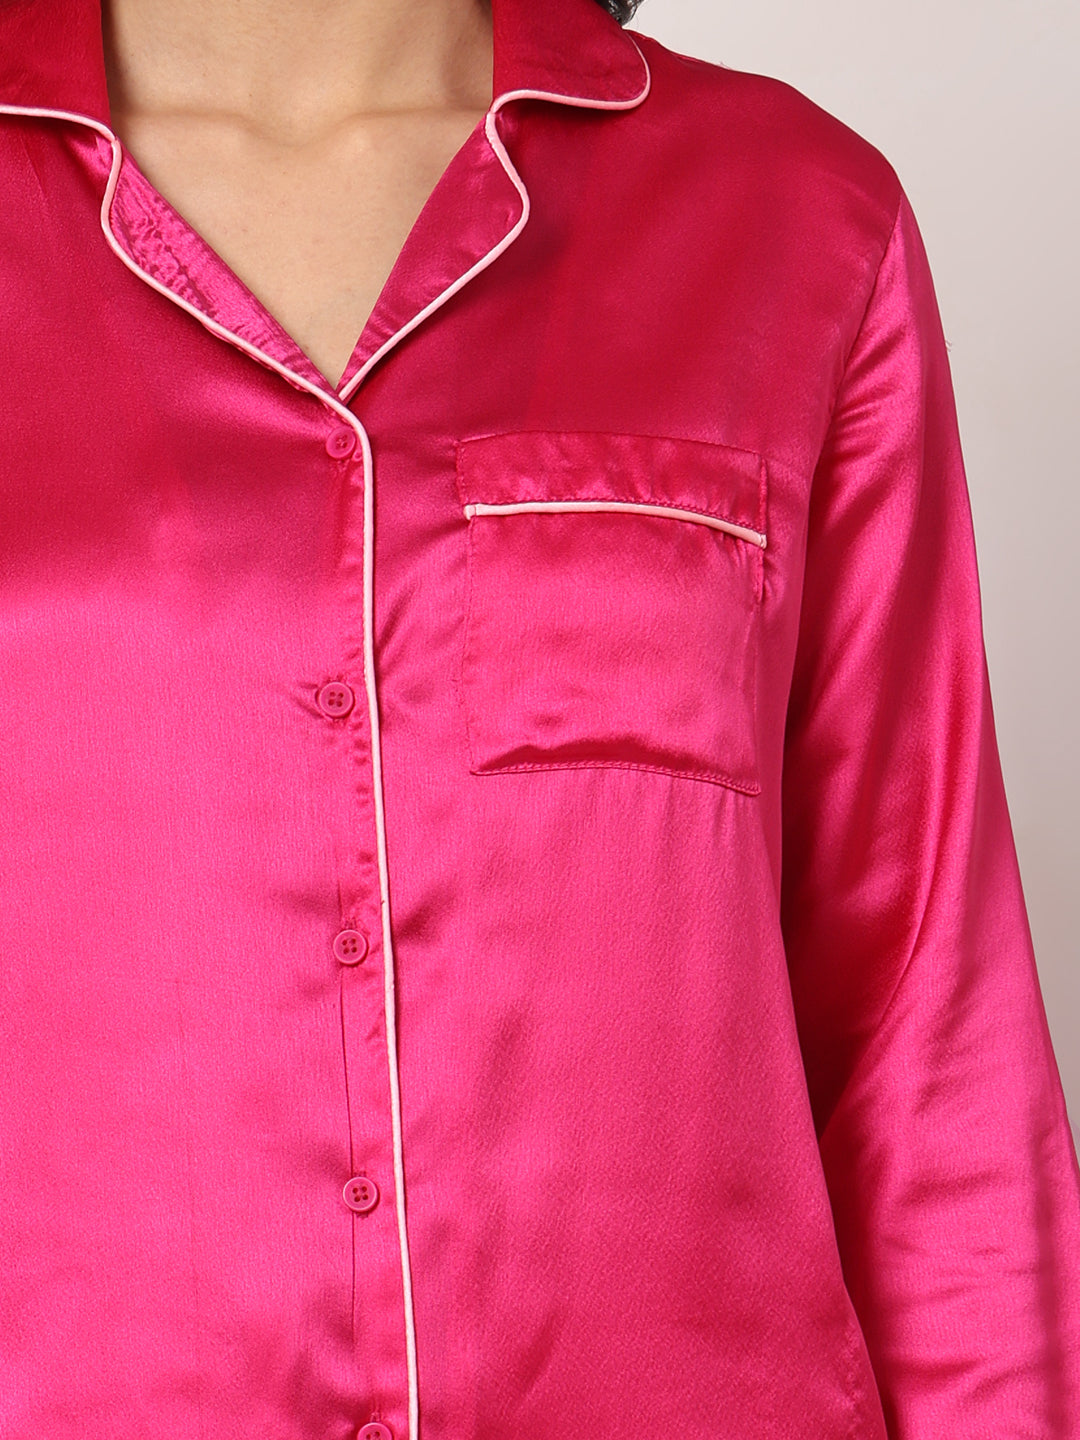 GOCHIKKO Women's Satin Plain Color Night Suit Set of Shirt & Pyjama Pack of 1(PINK)